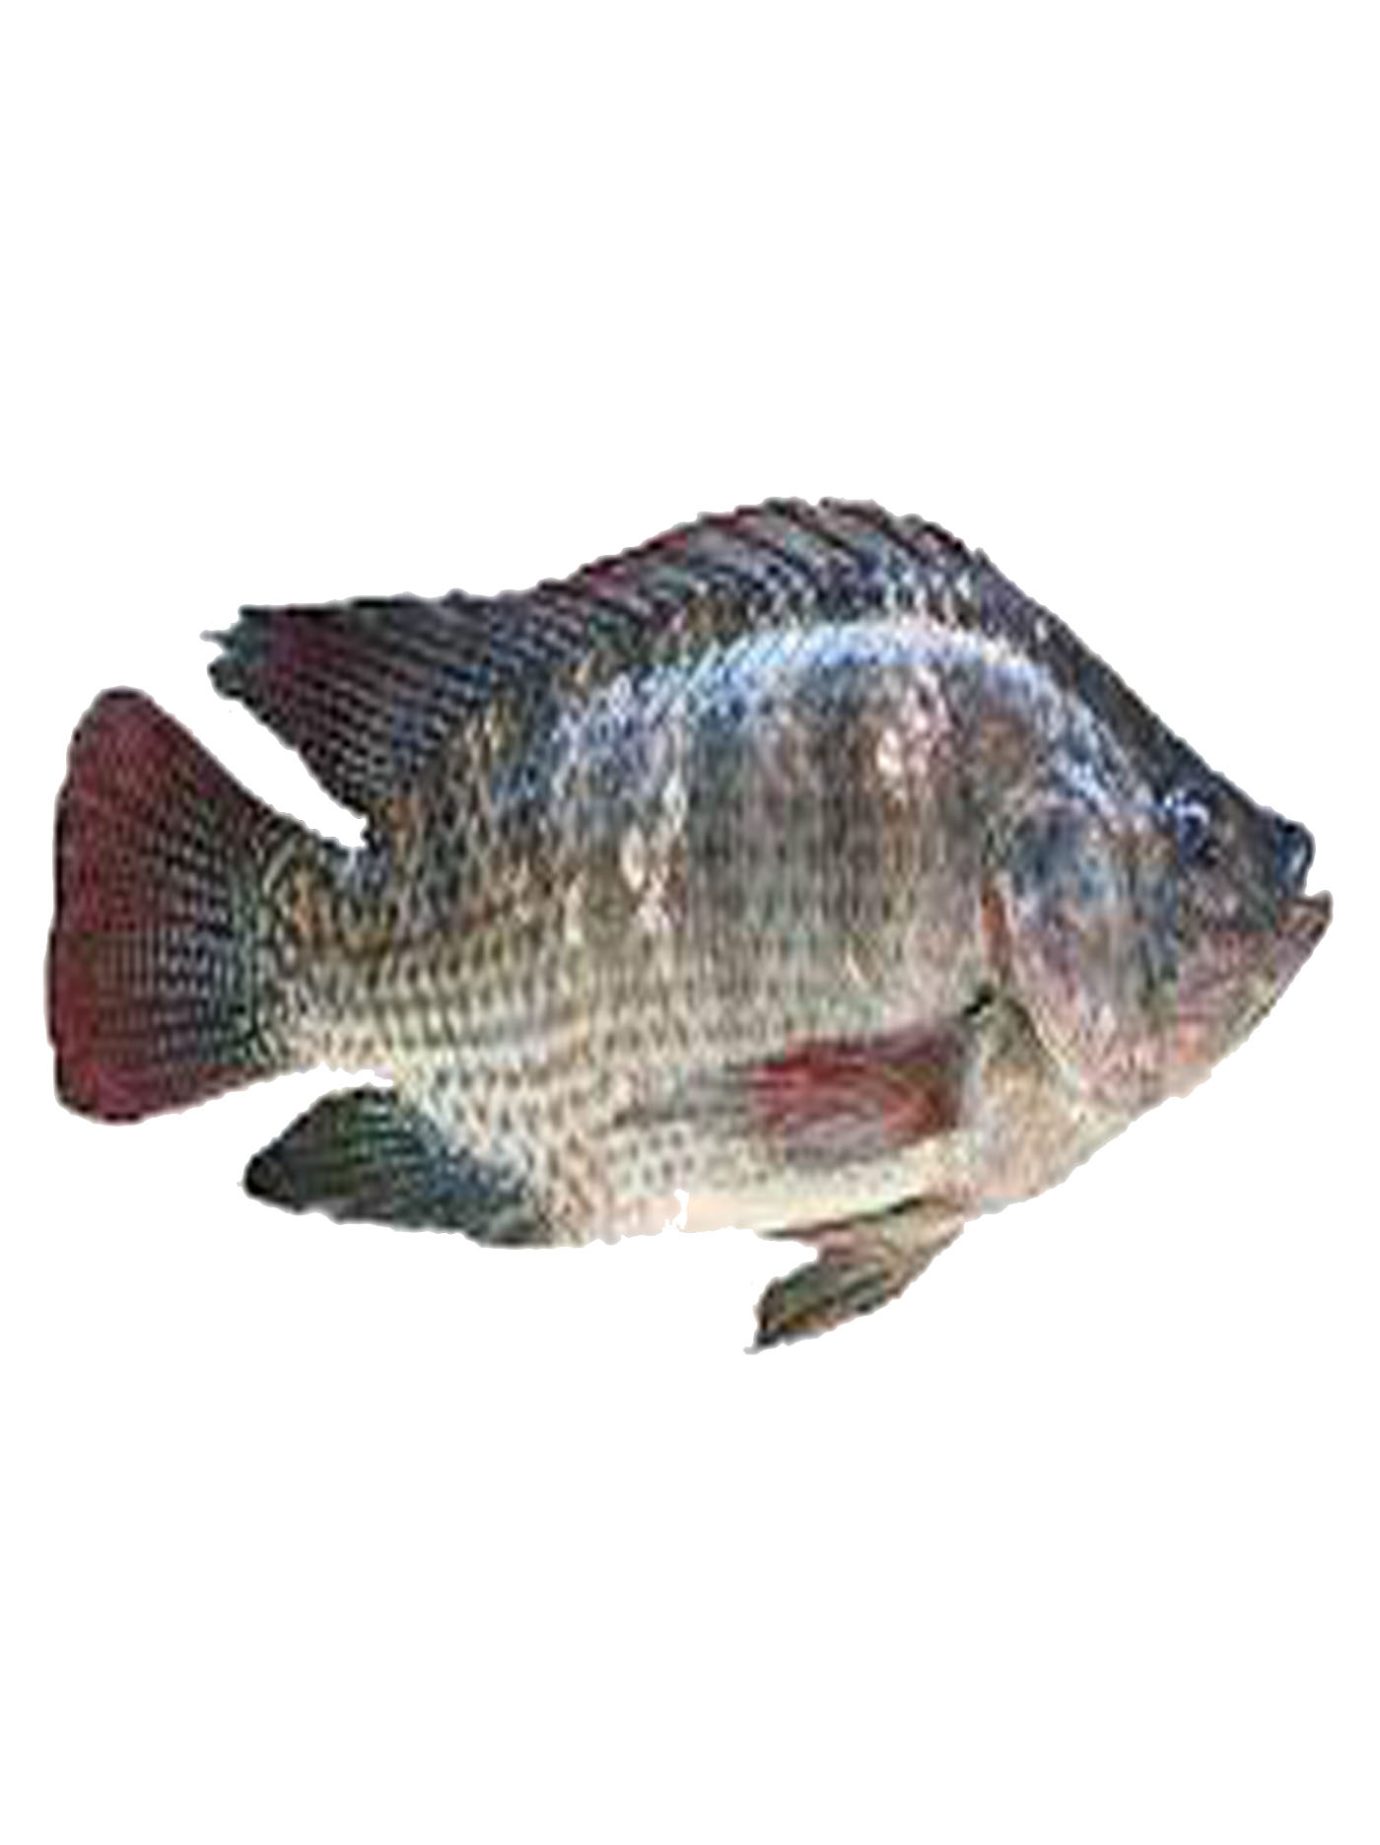  مروری بر تک جنس سازی ماهی تیلاپیا